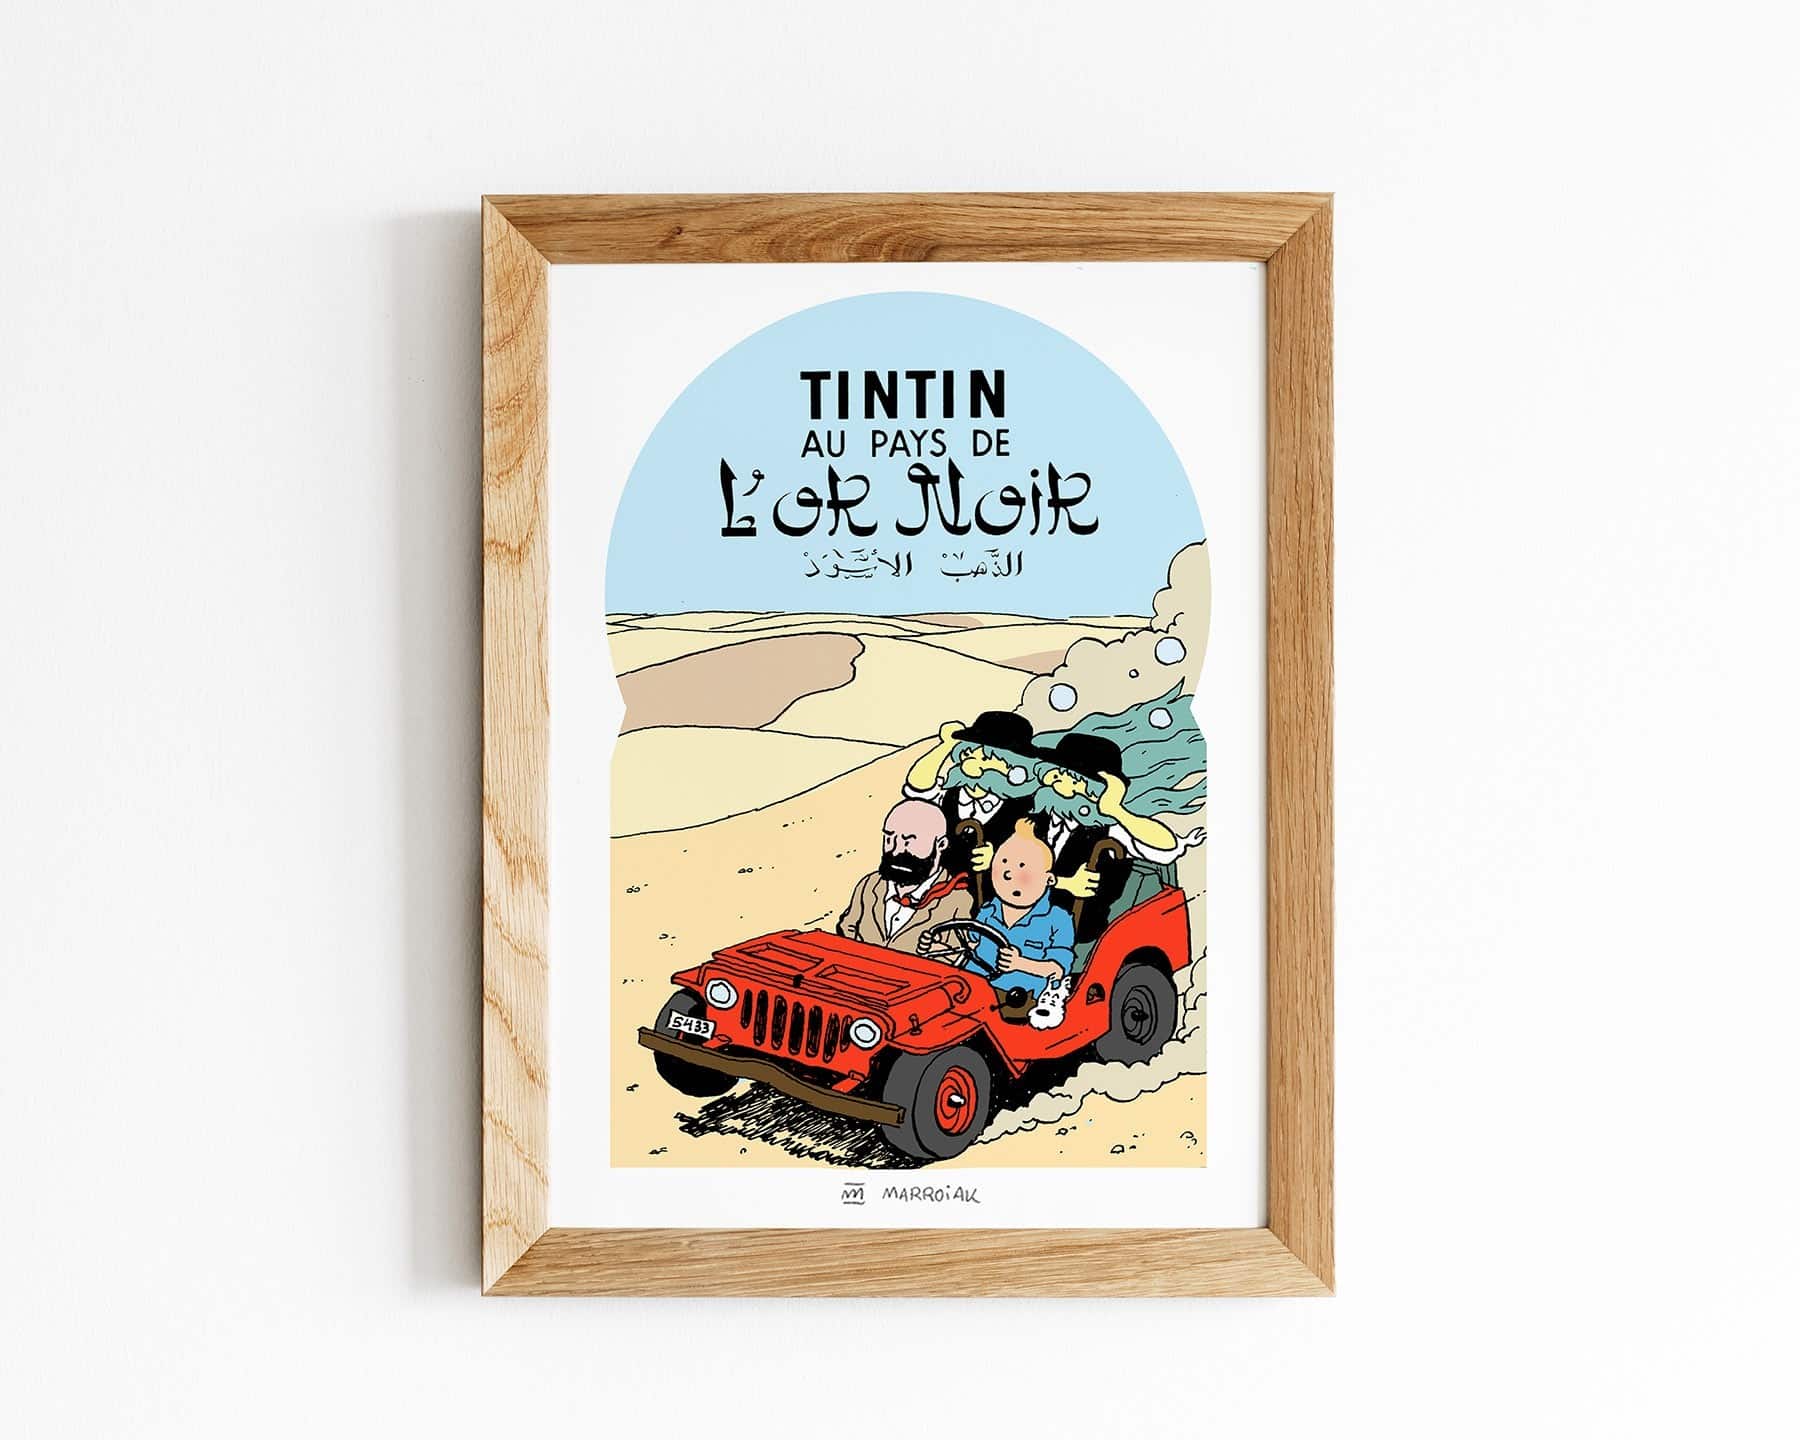 Dibujo de Tintin en el Pais del oro negro